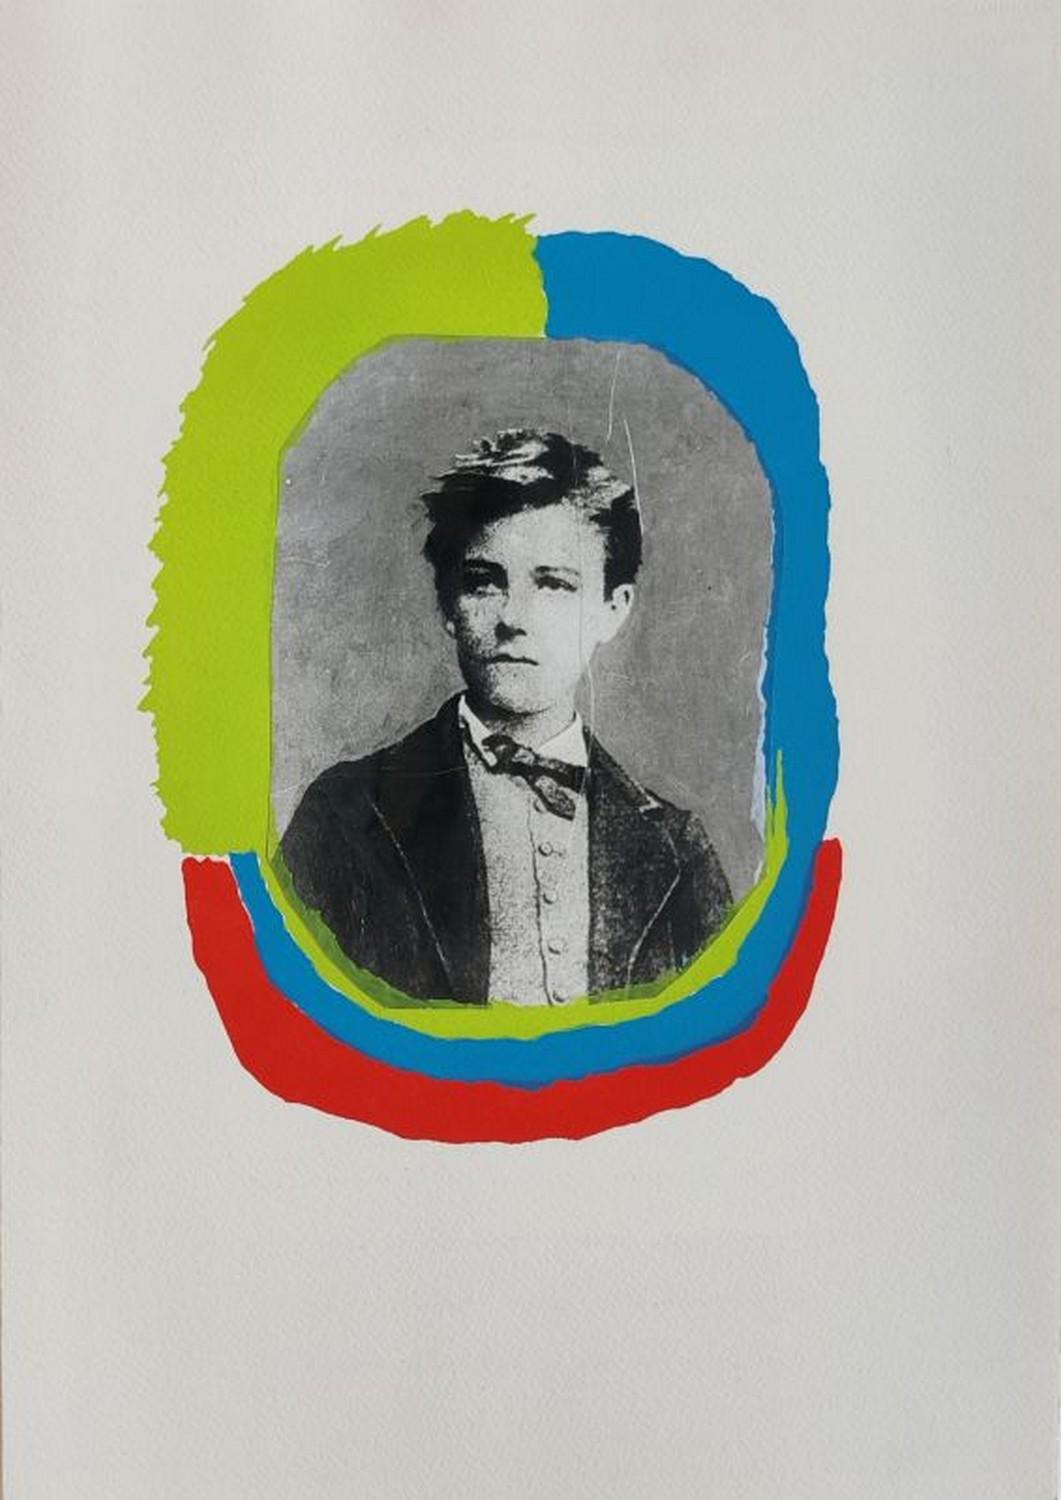 Abstract Print Sonia Delaunay - Les éclairages de Rimbaud 